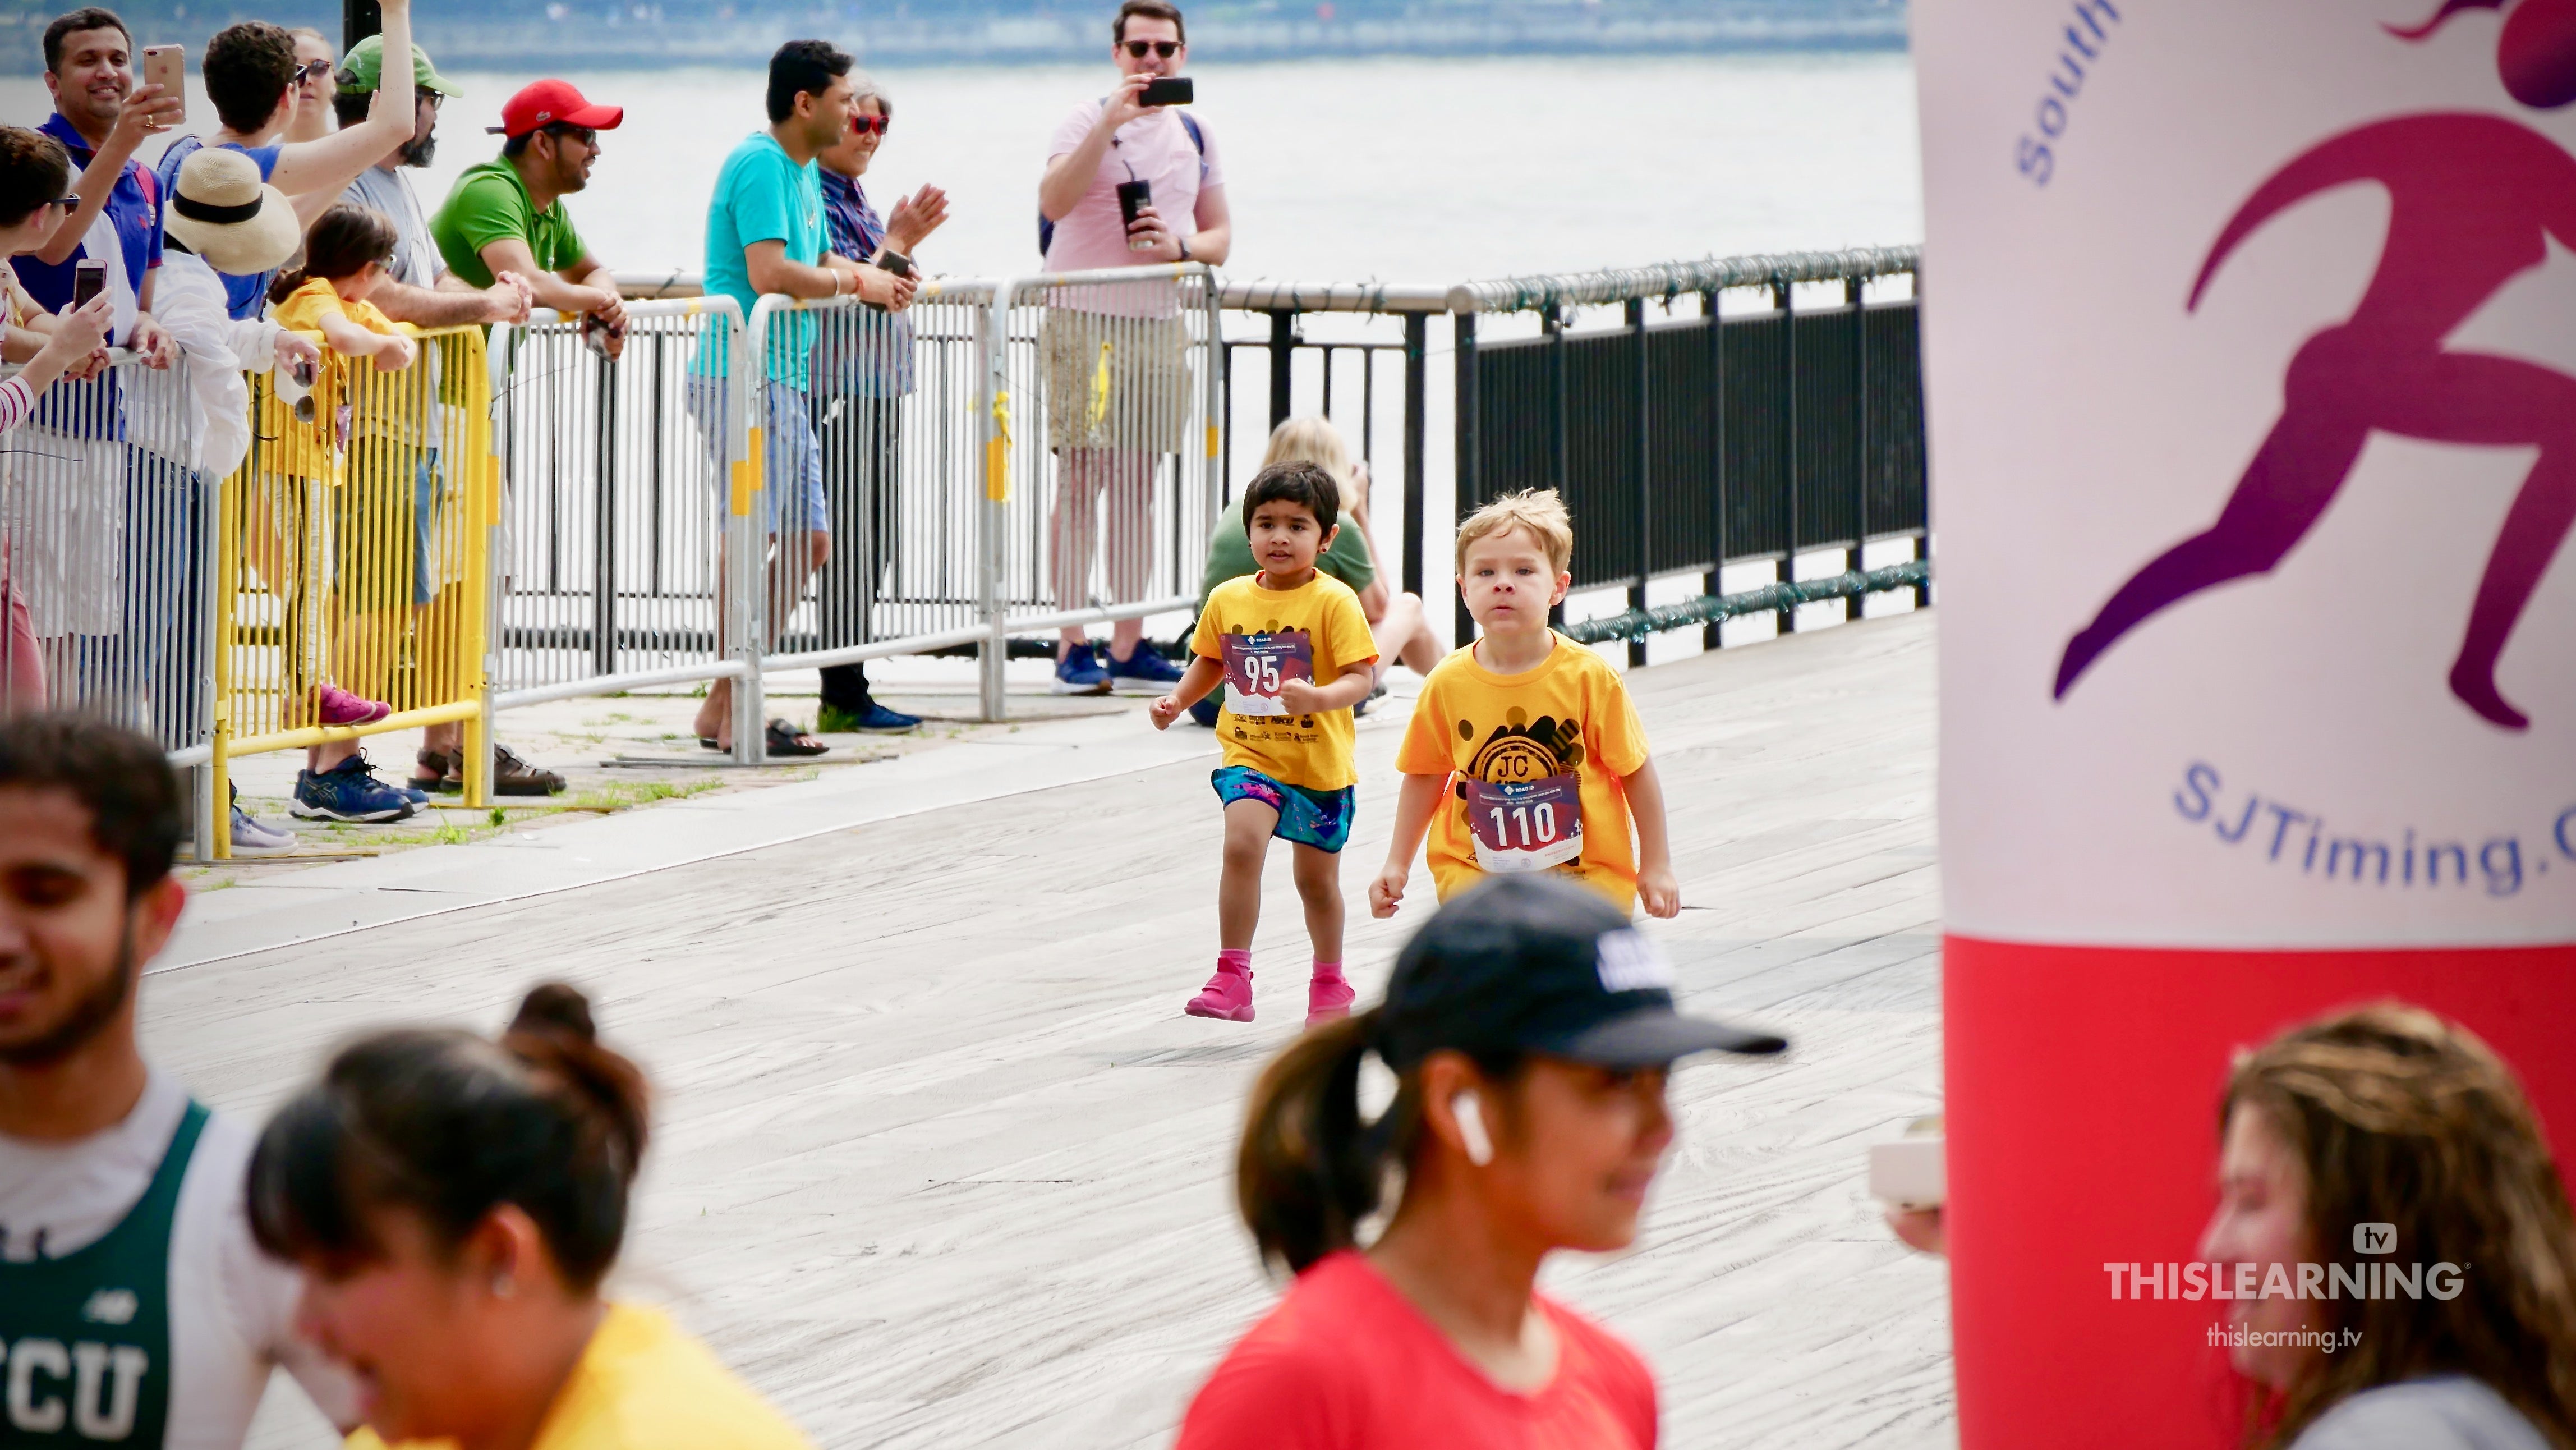 Ready, Set, Fun! Jersey City Kids Run (2019)